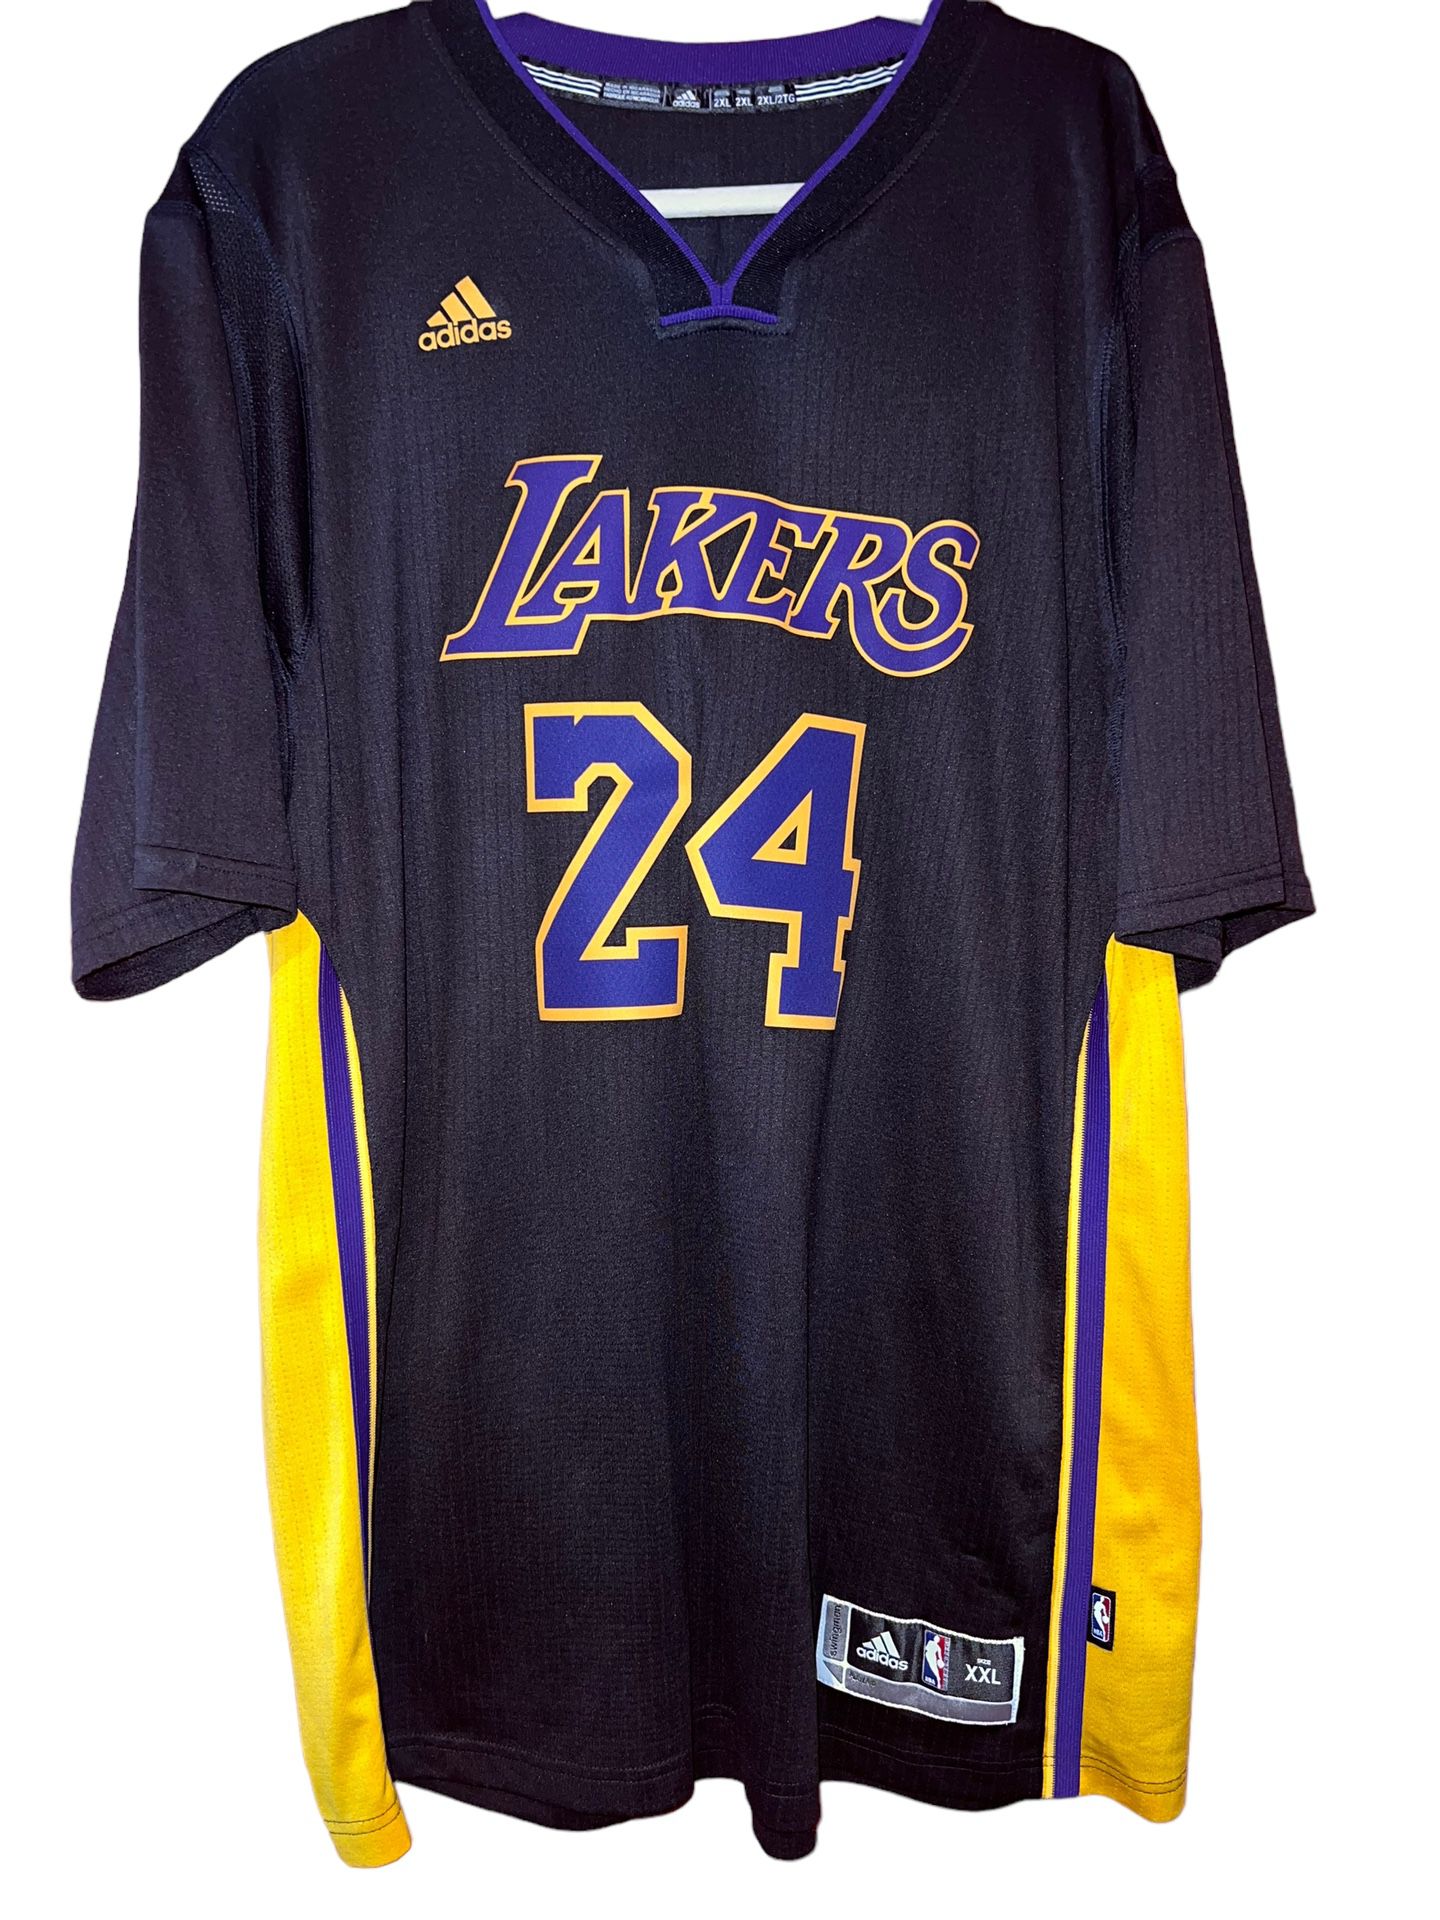 Adidas Los Angeles Lakers Kobe Bryant Hollywood Nights Jersey w/ sleeves  Small